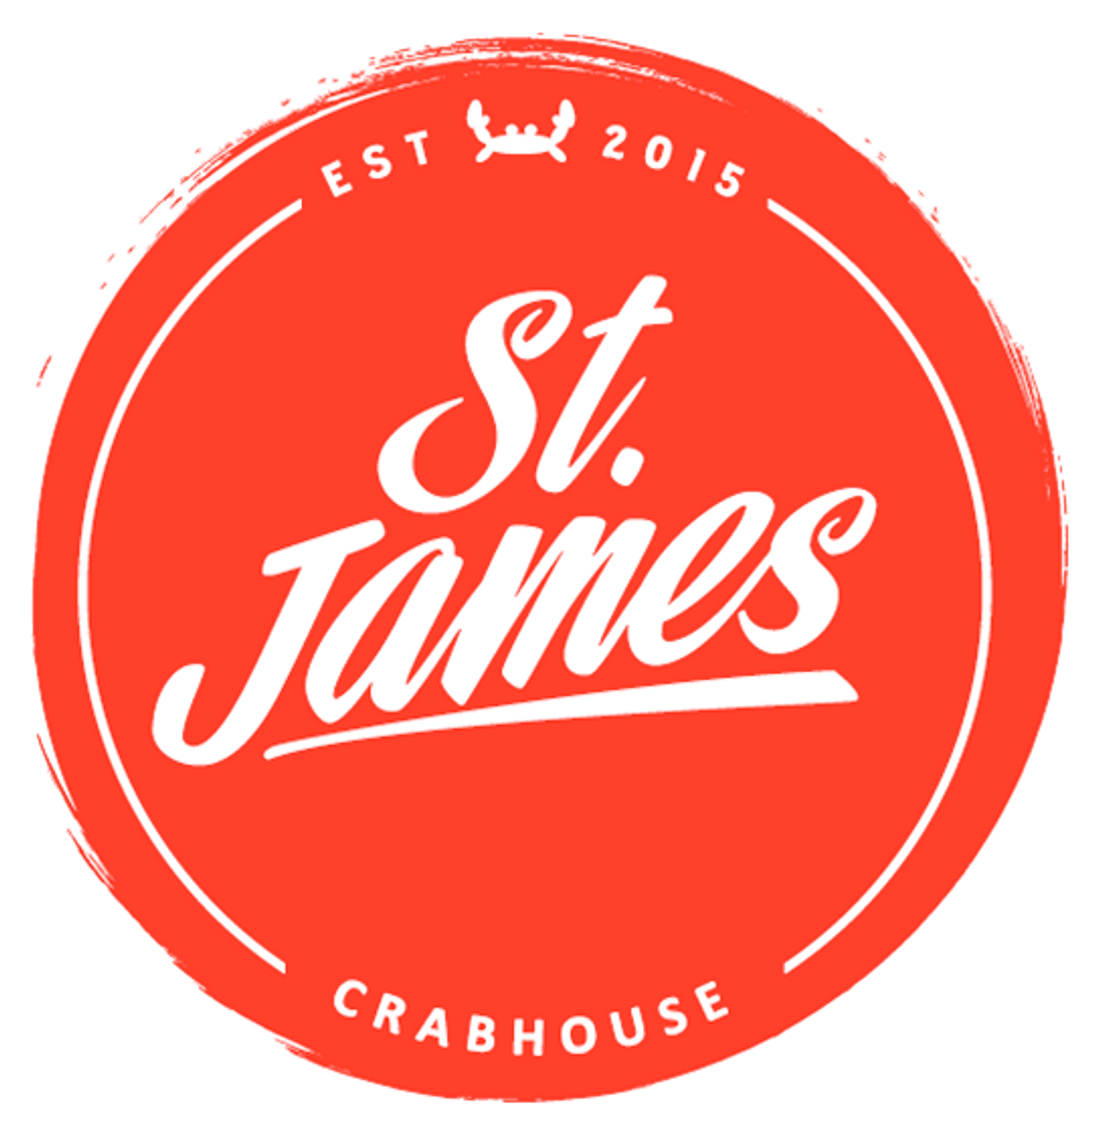 St. James Crabhouse Bar & Grill Hamilton